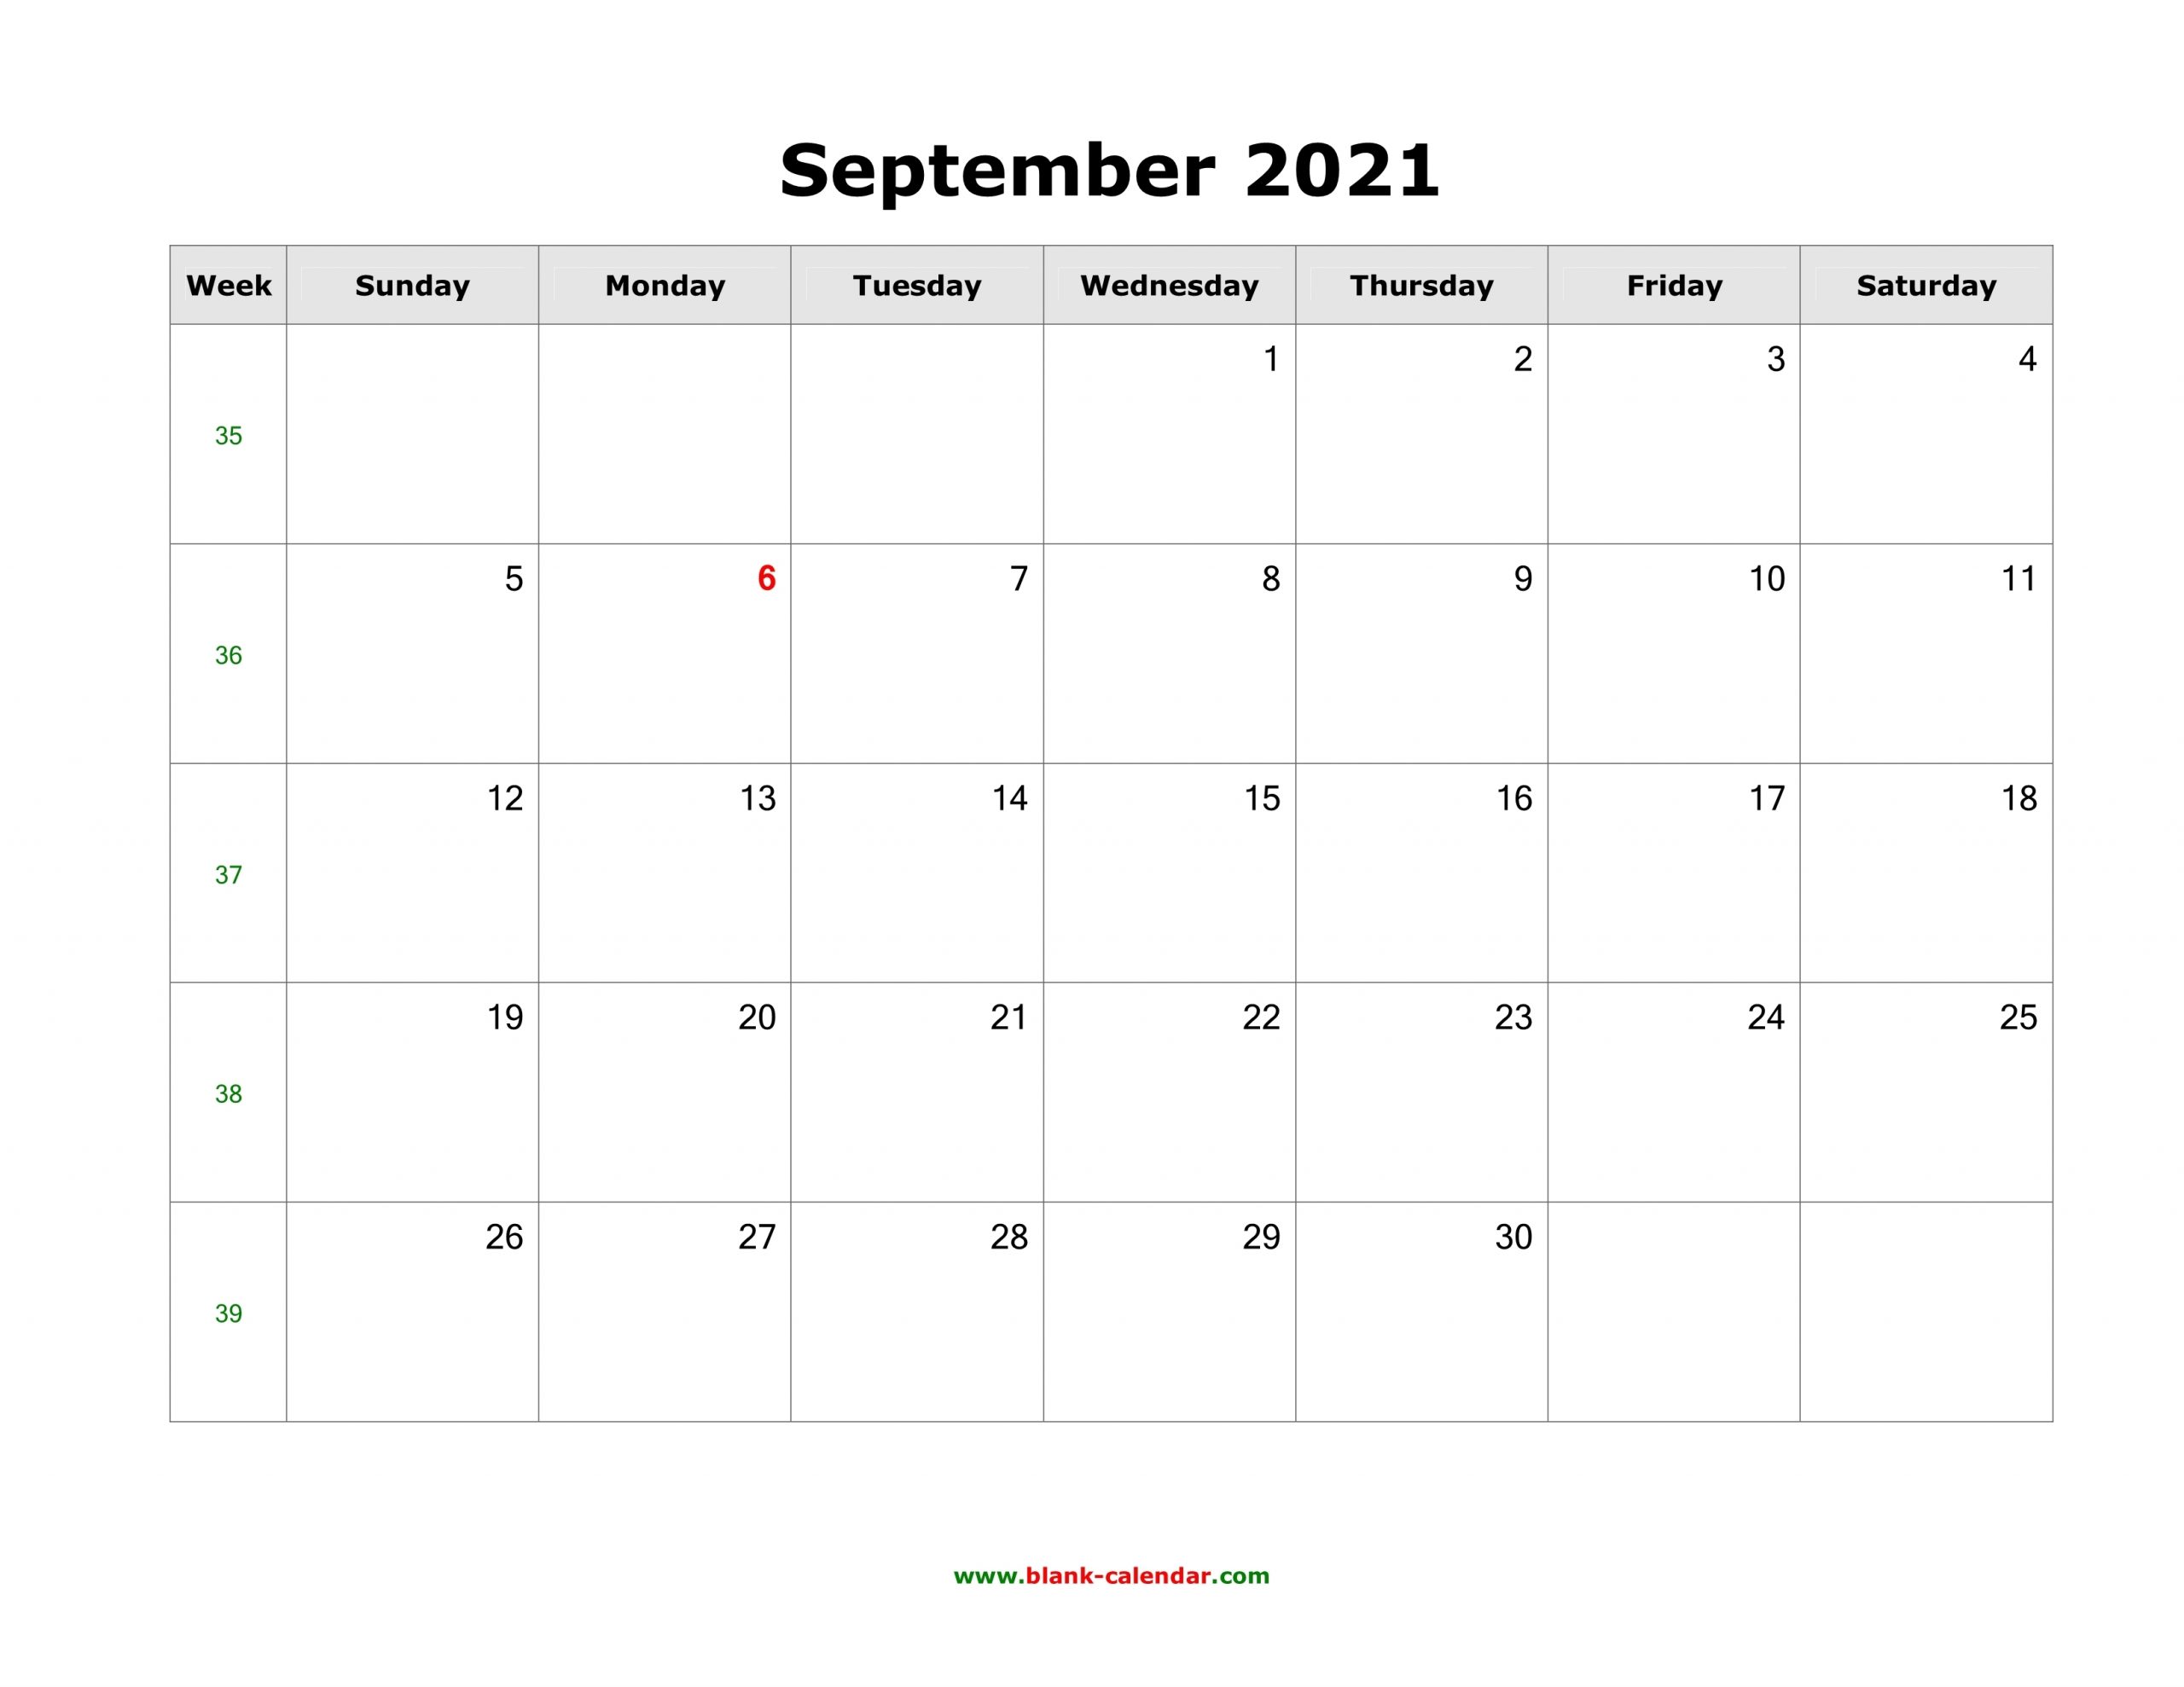 Download September 2021 Blank Calendar (Horizontal)